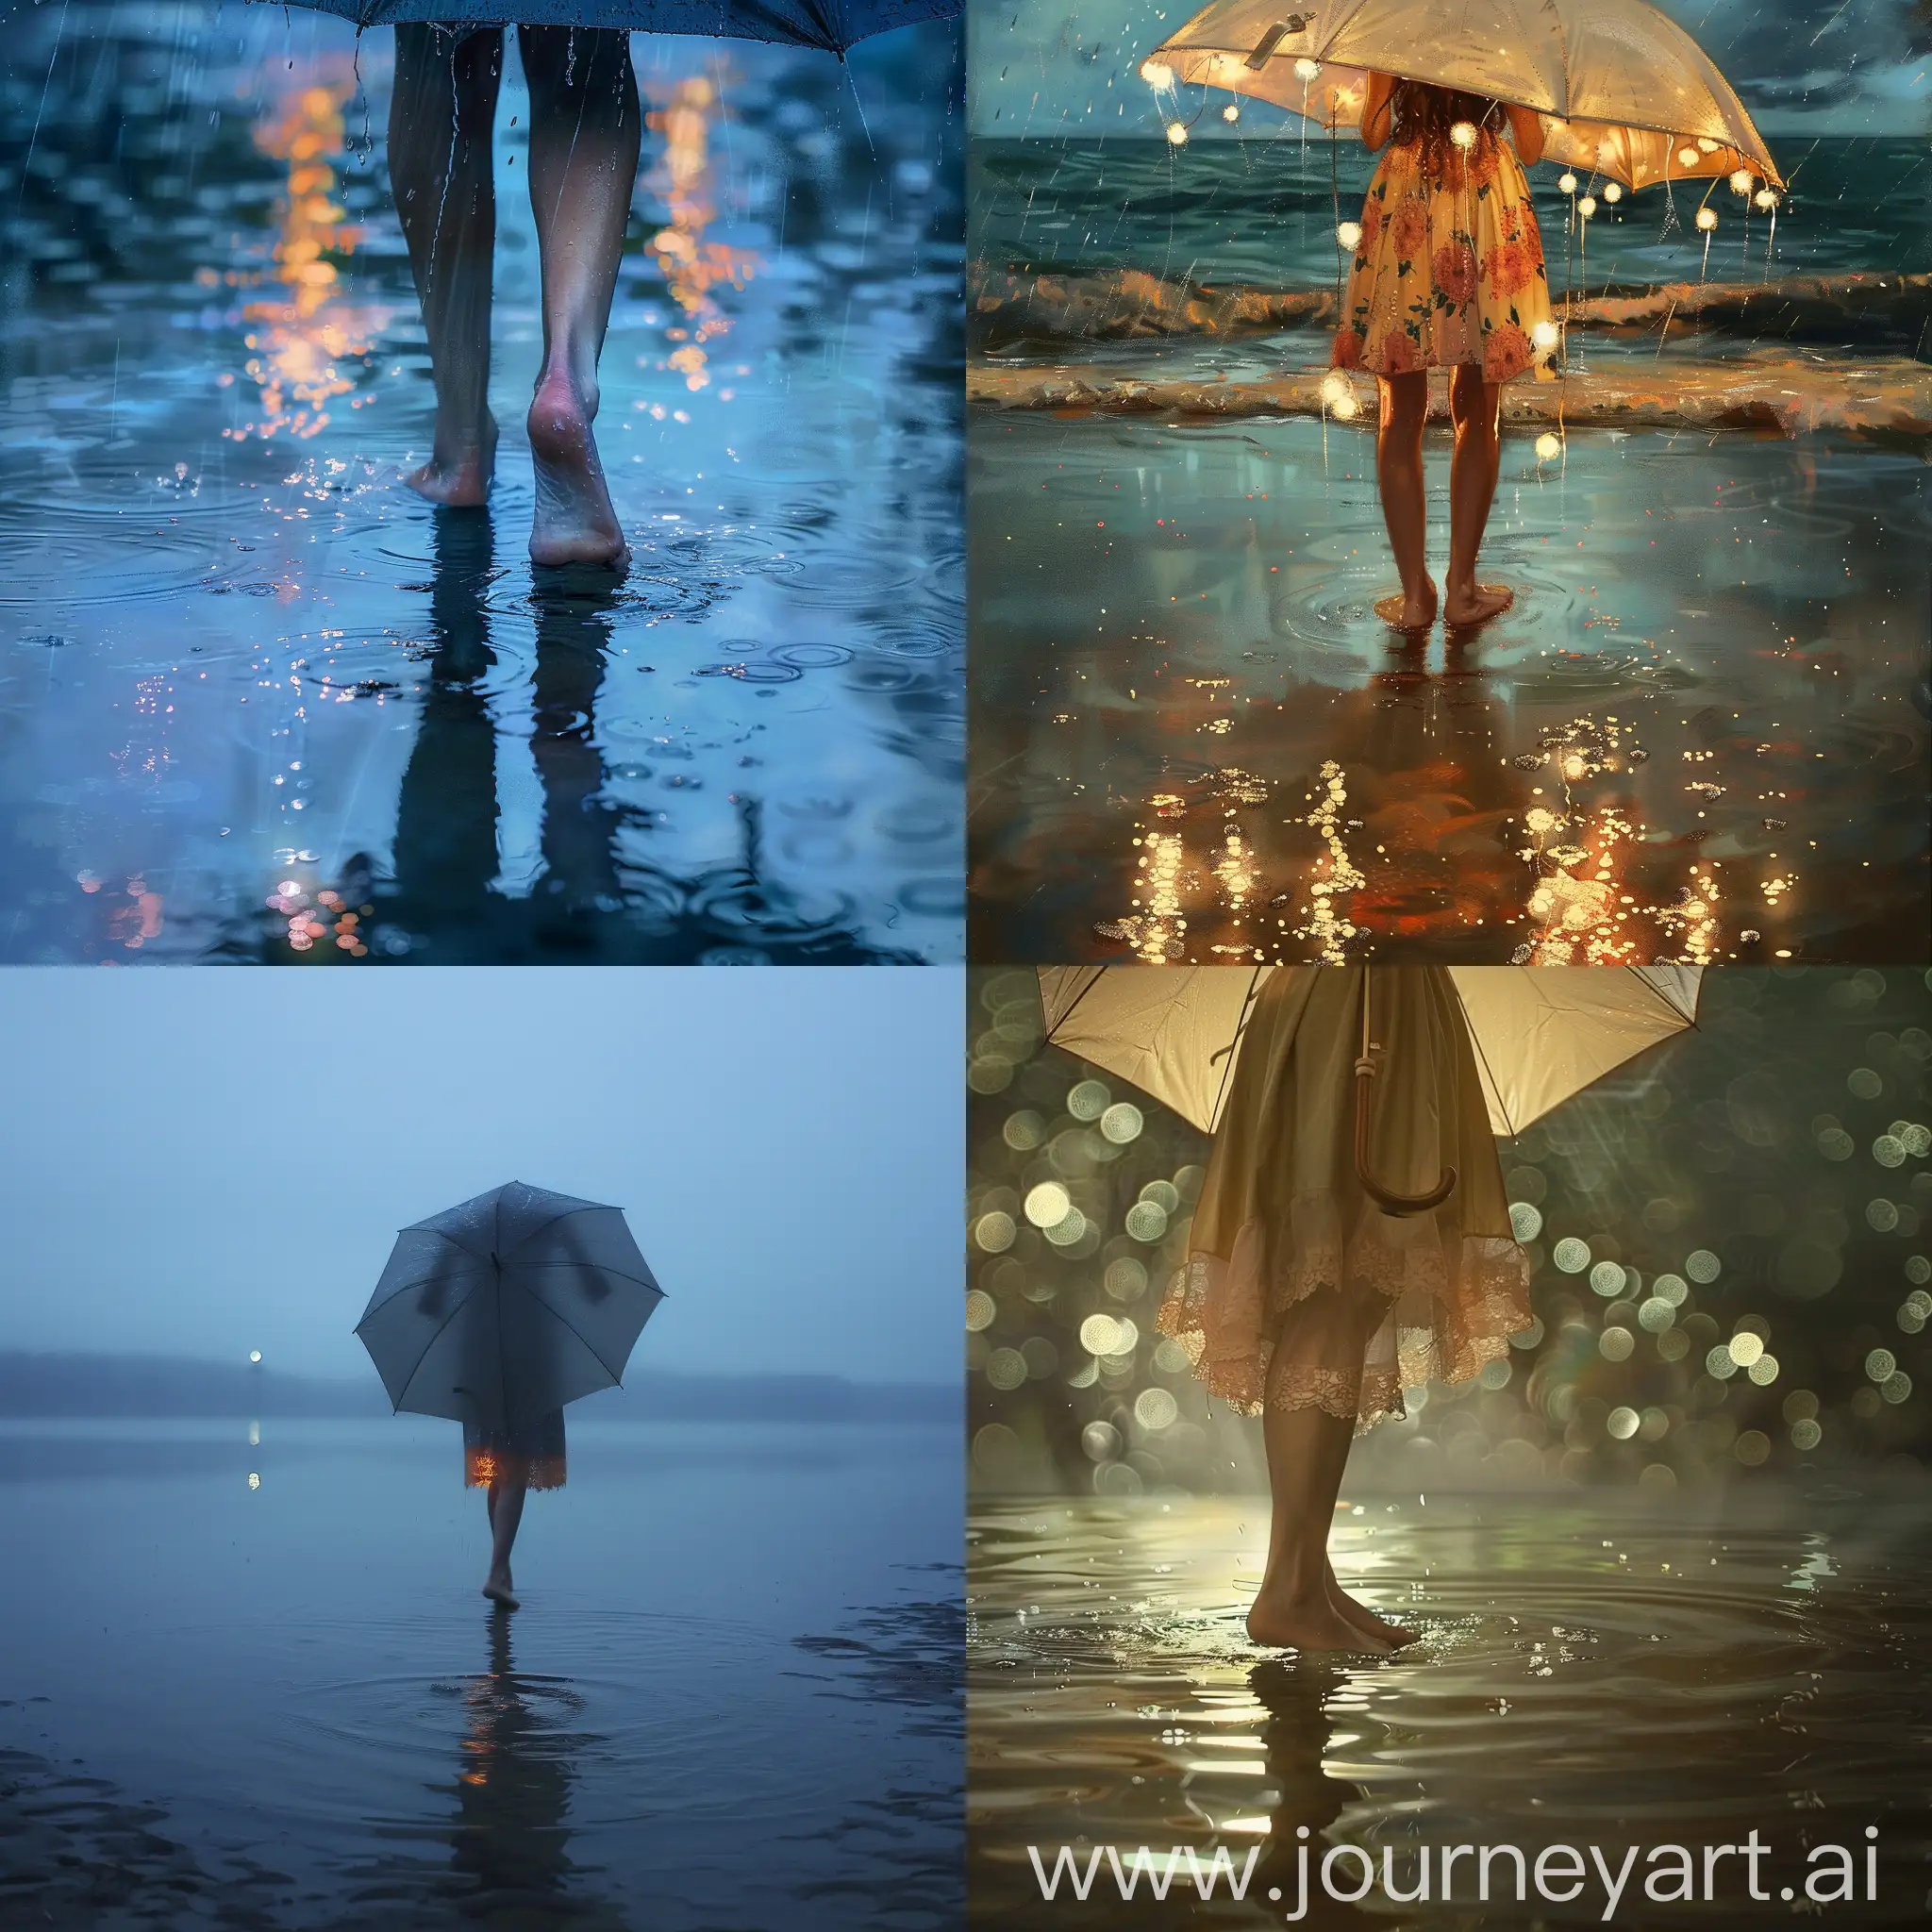 Serene-Lakeside-Scene-with-Rain-and-Umbrella-in-One-Piece-Dress